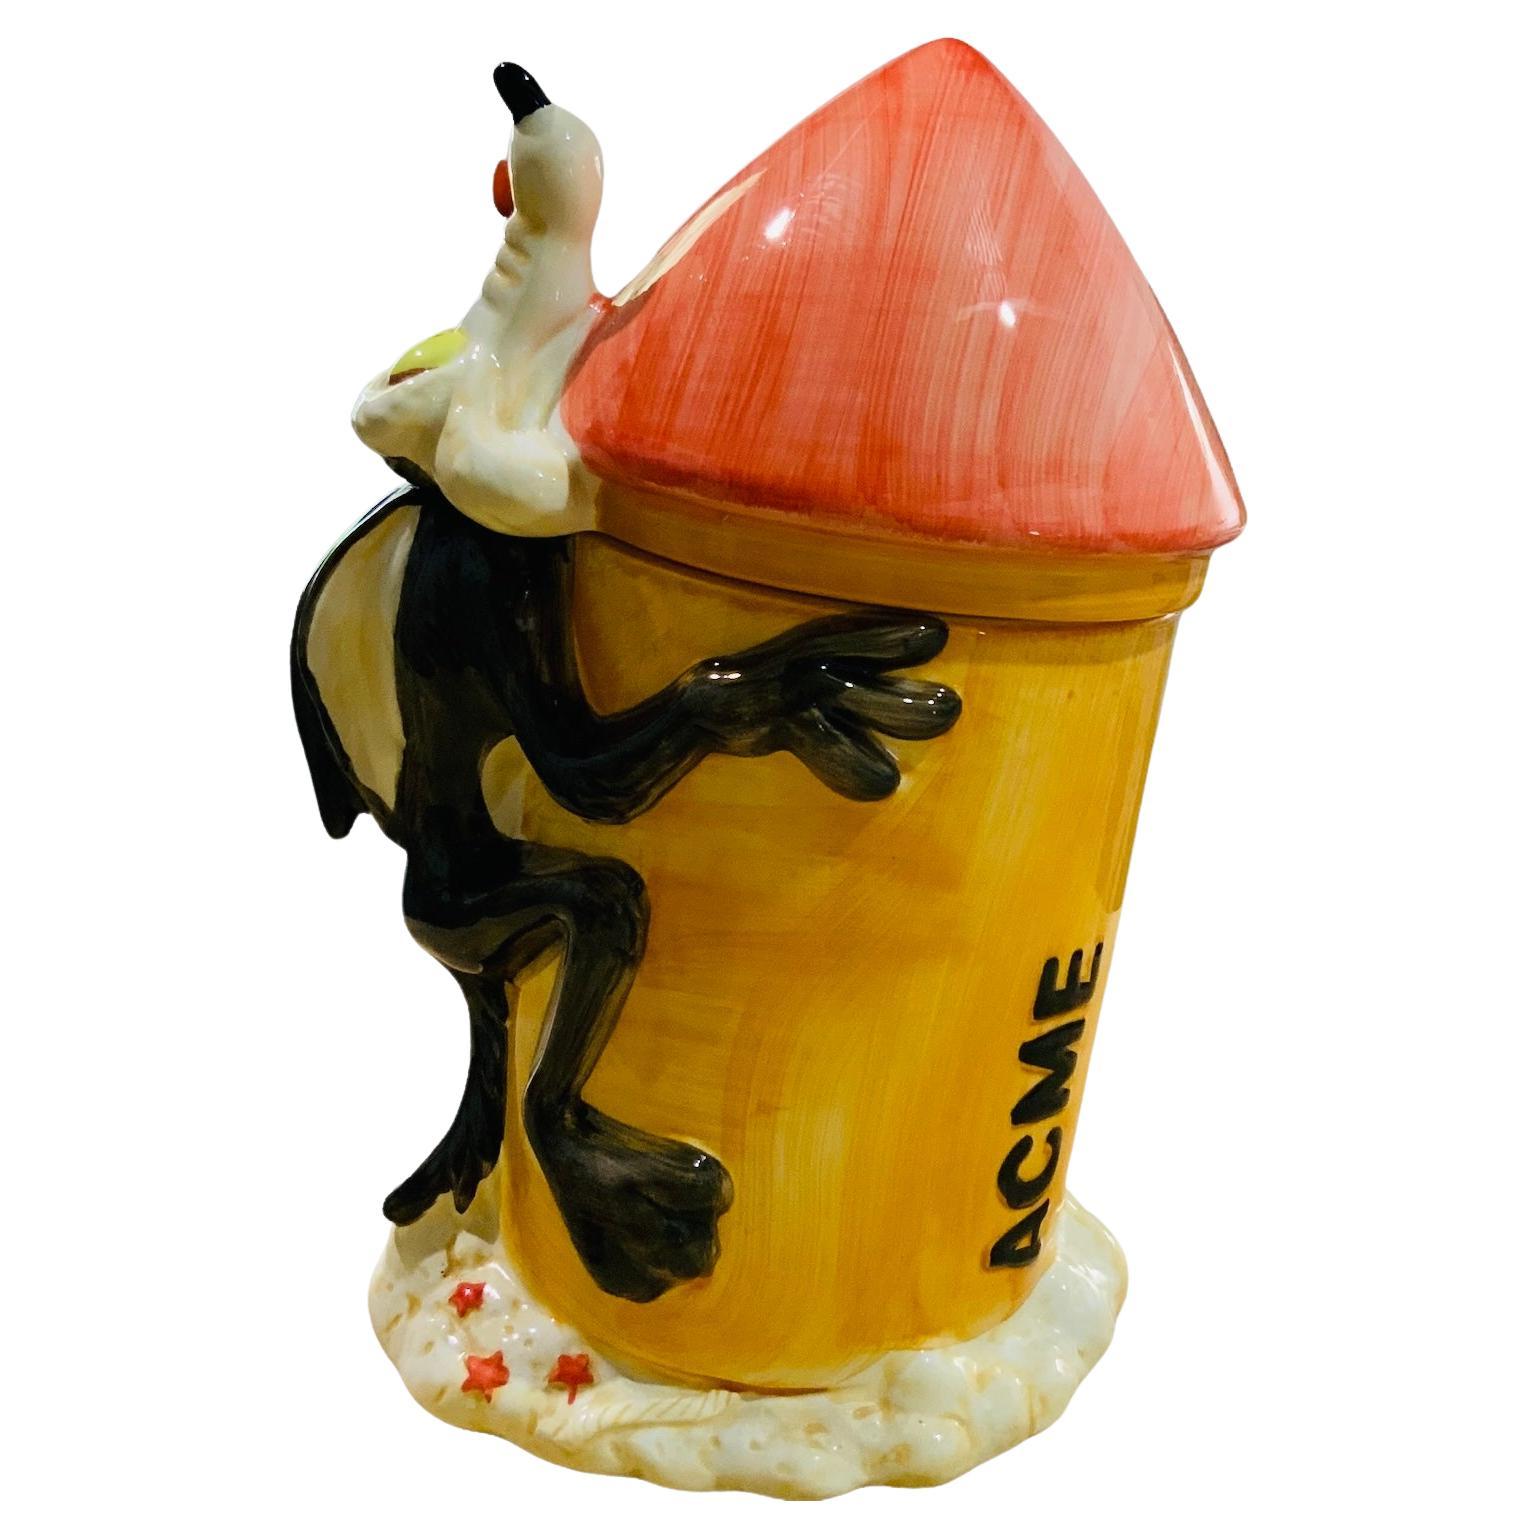 Warner Bros, Looney Tunes Wile E. Coyote ACME Rocket Cookie Jar For Sale